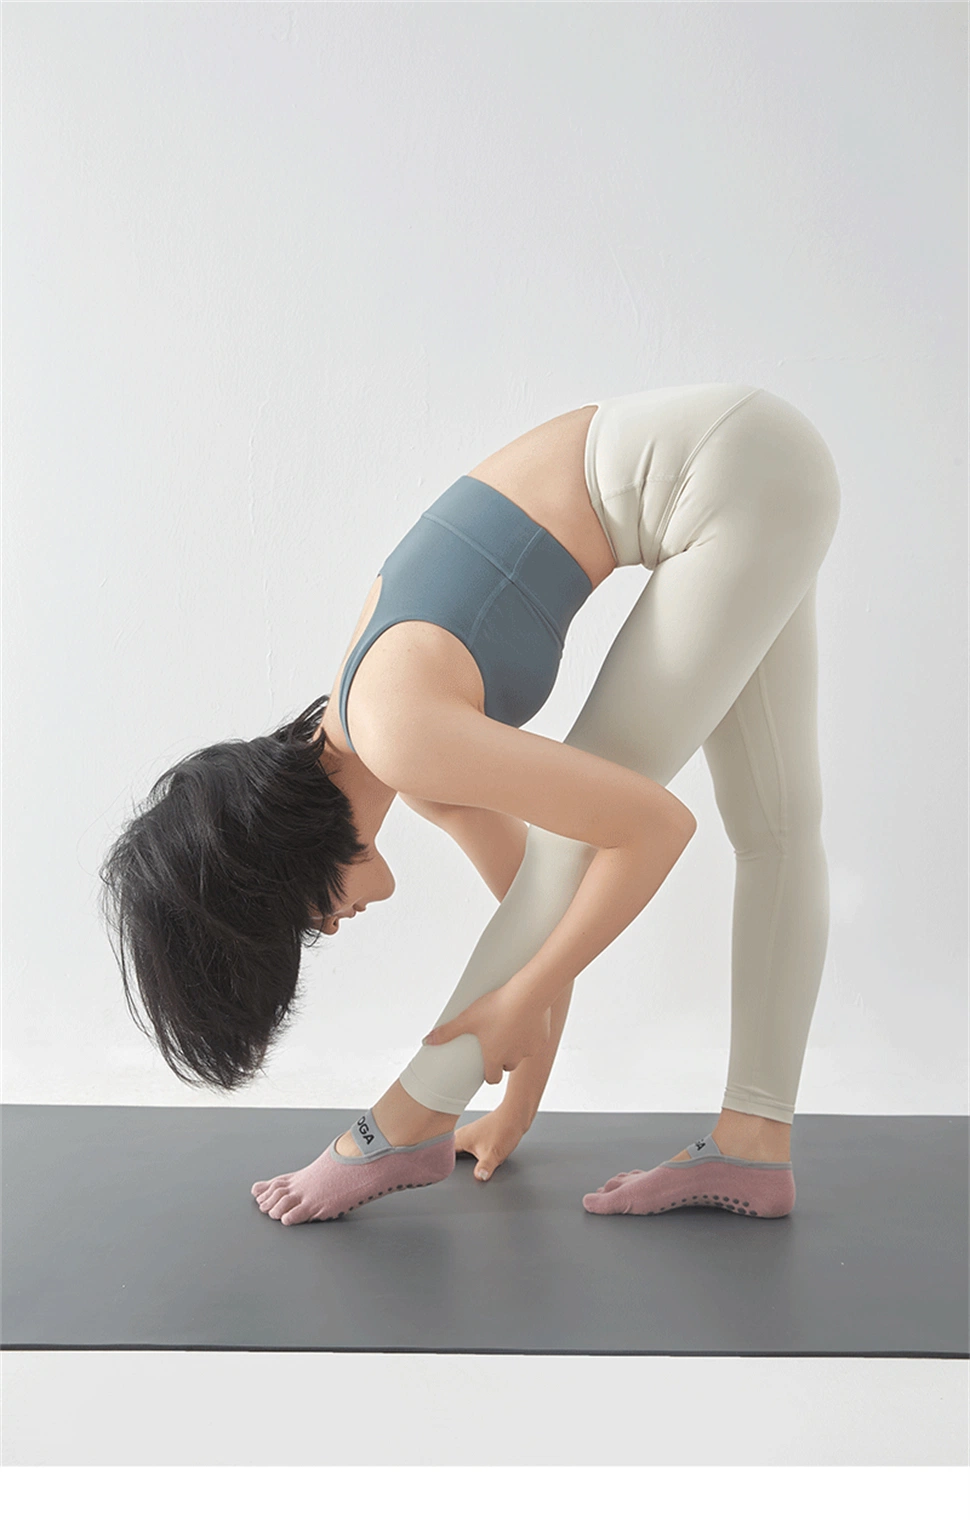 Yoga Socks for Women Non-Slip Grips &amp; Straps, Ideal for Pilates, Pure Barre, Ballet, Dance, Barefoot Workout